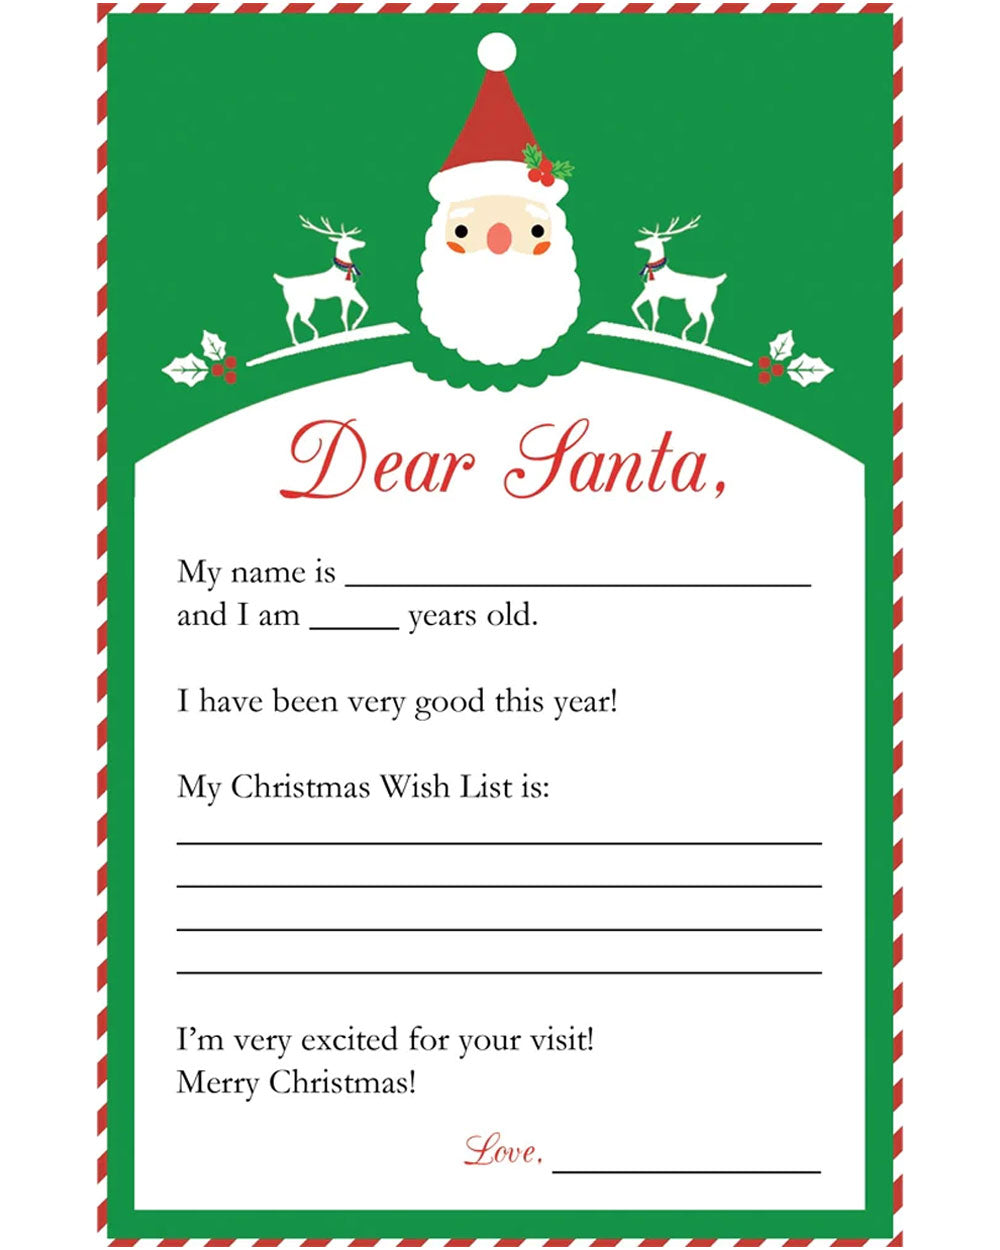 Dear Santa Fill in the Blank Cards